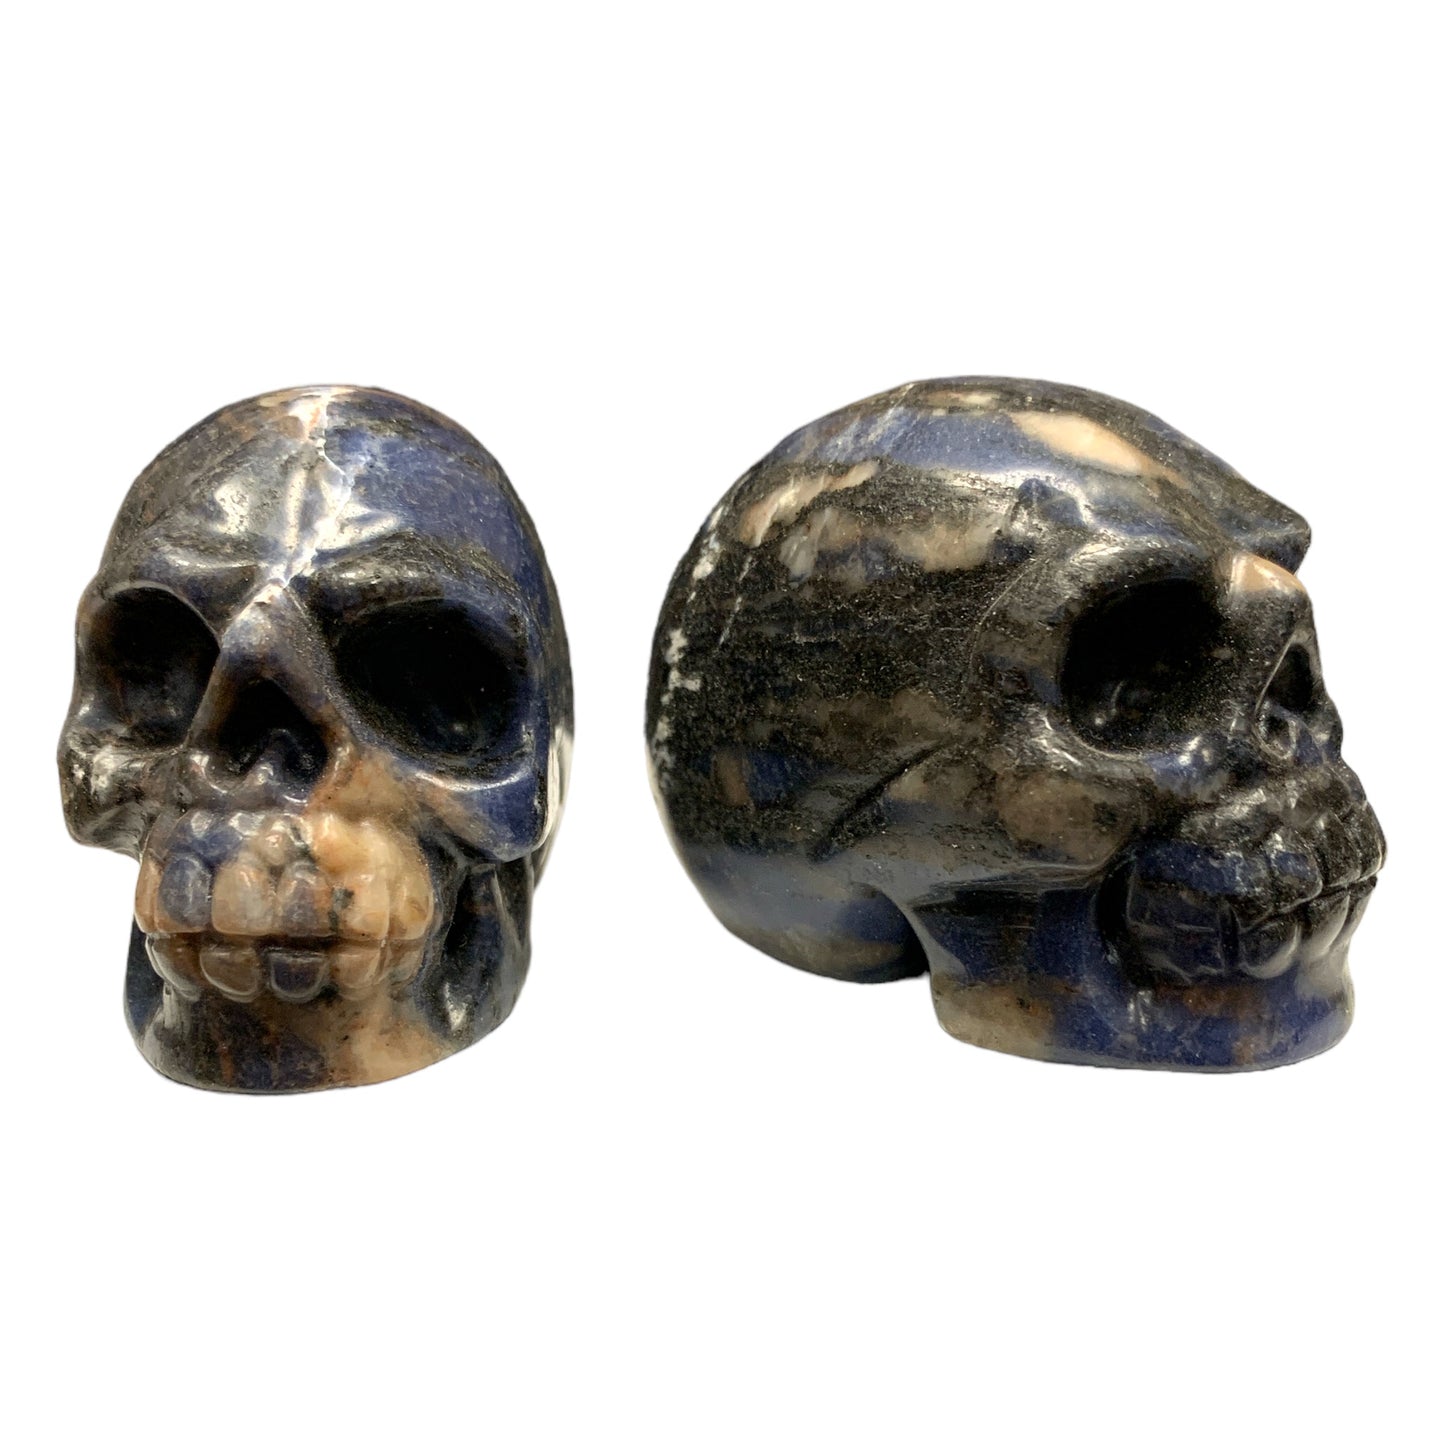 Skull Small - RHYOLITE - LLANITE - QUE SERA - Glaucophane - Small 40x50 mm - China - NEW622